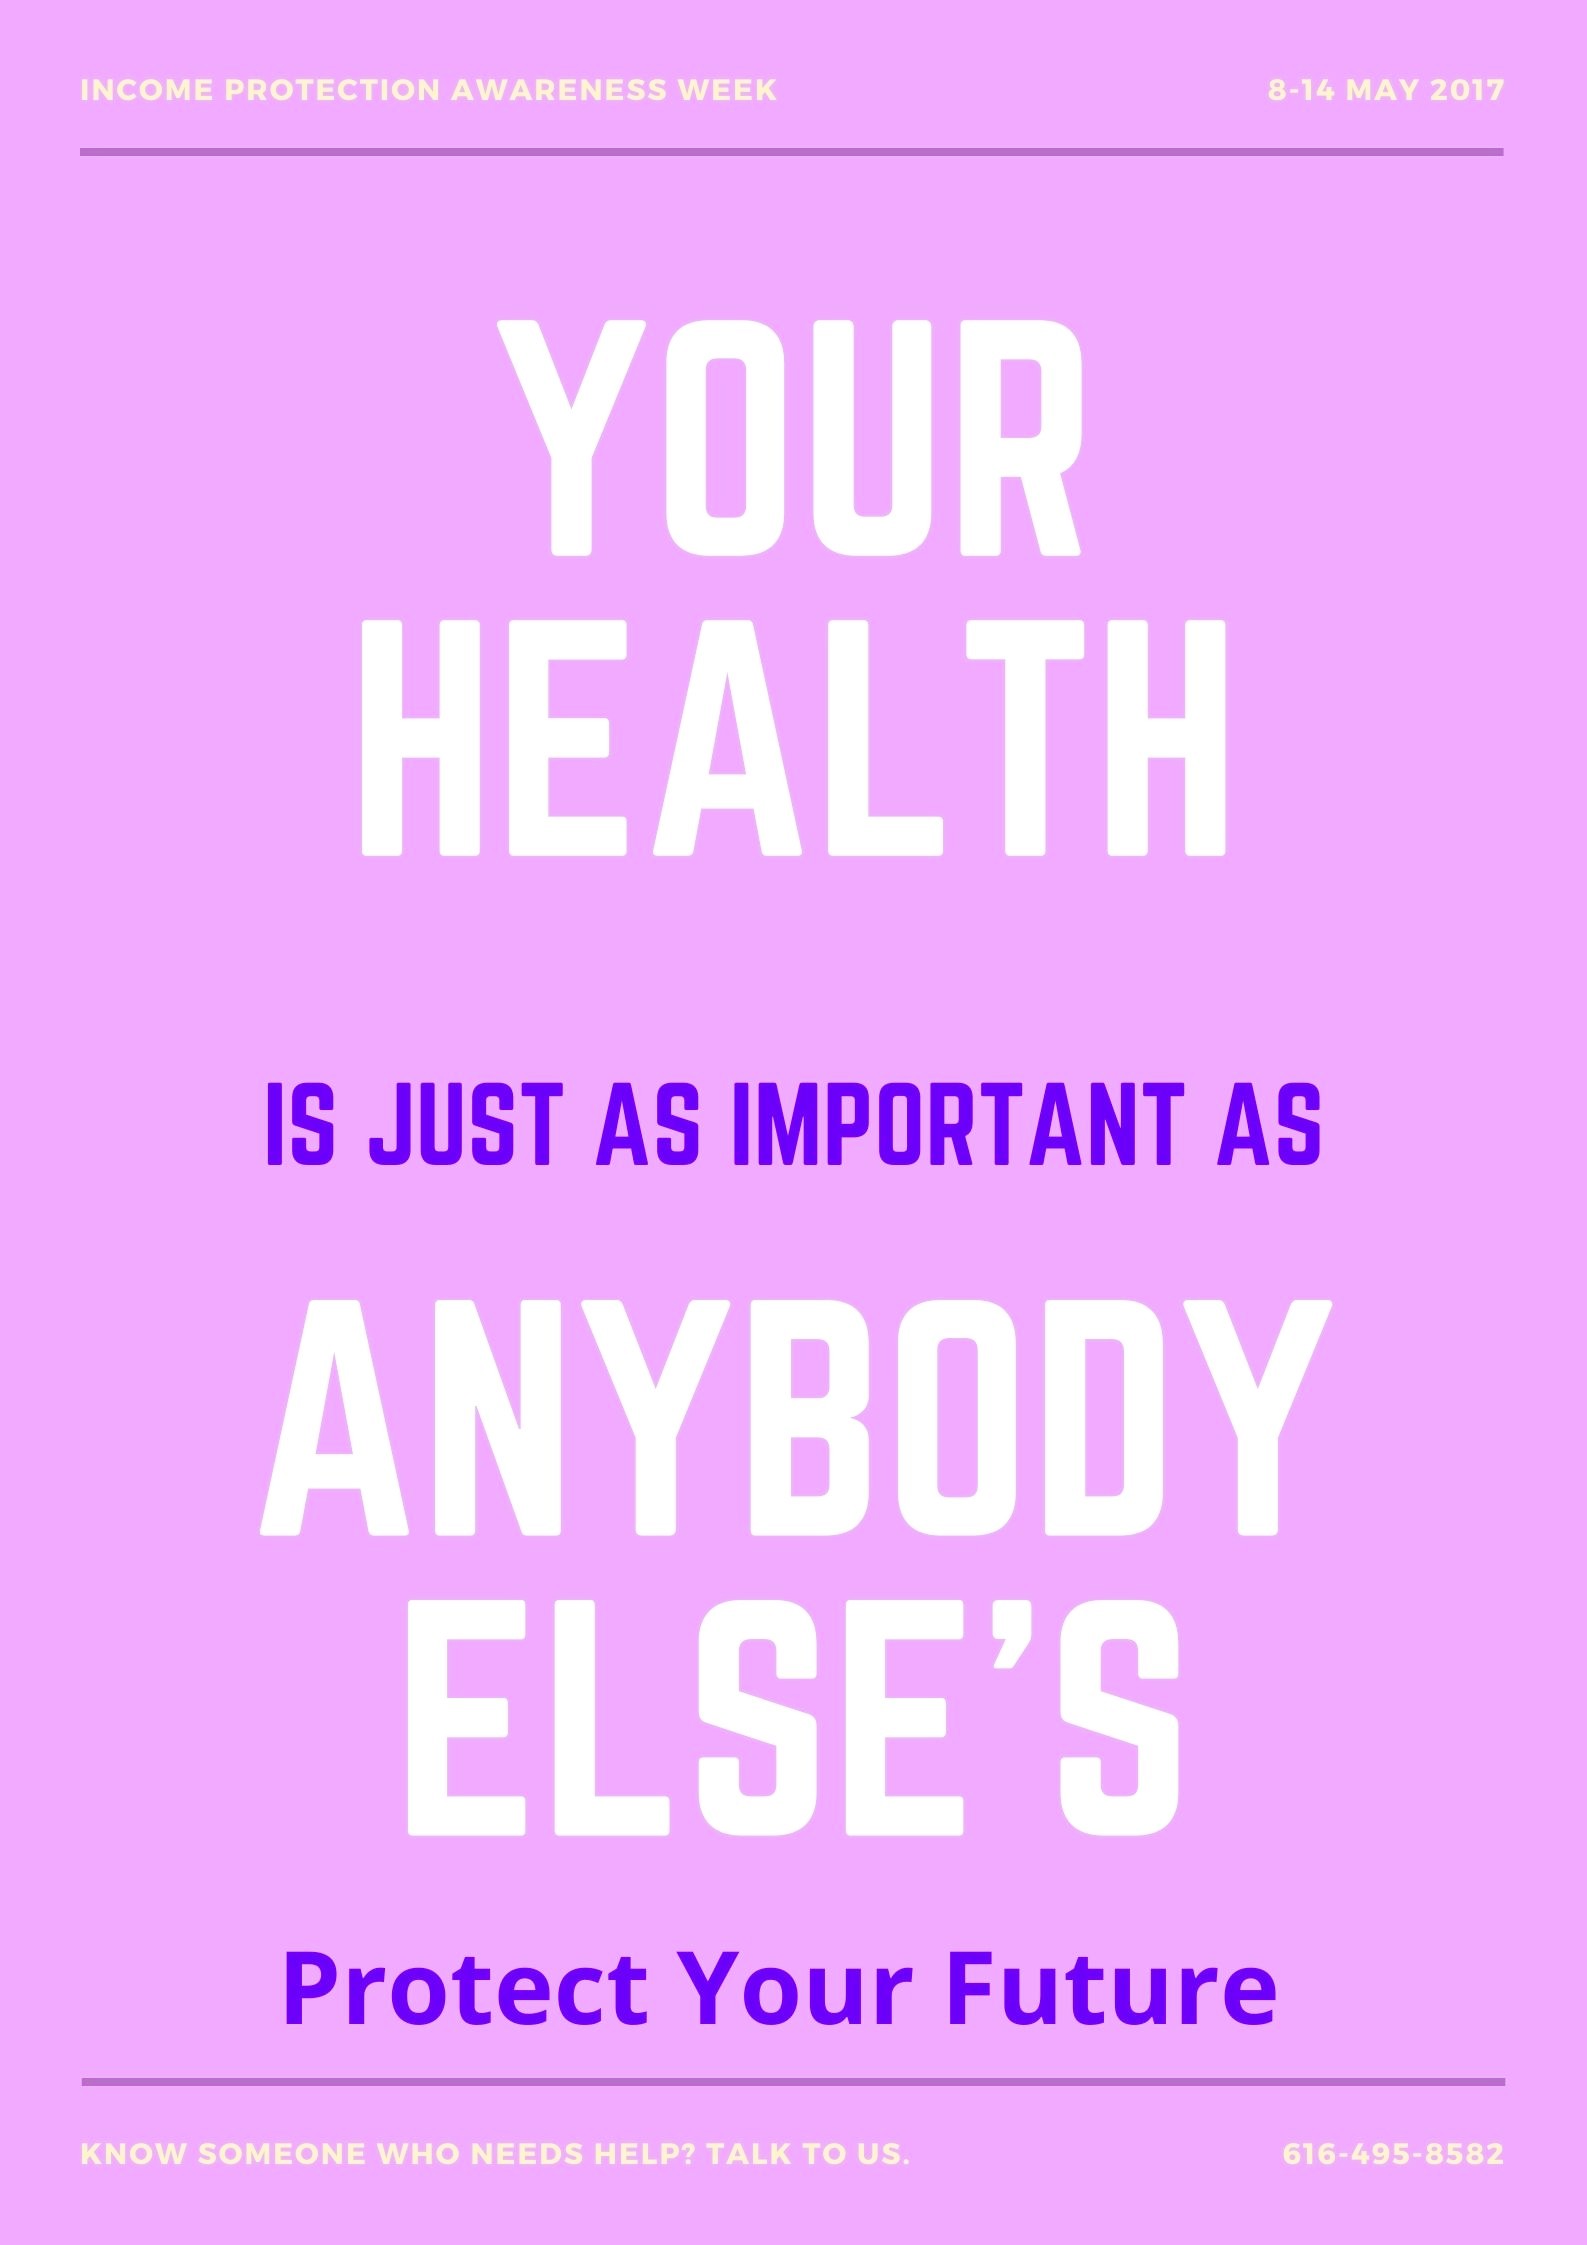 <img src="health.jpg" alt="health is important when self employed"/> 